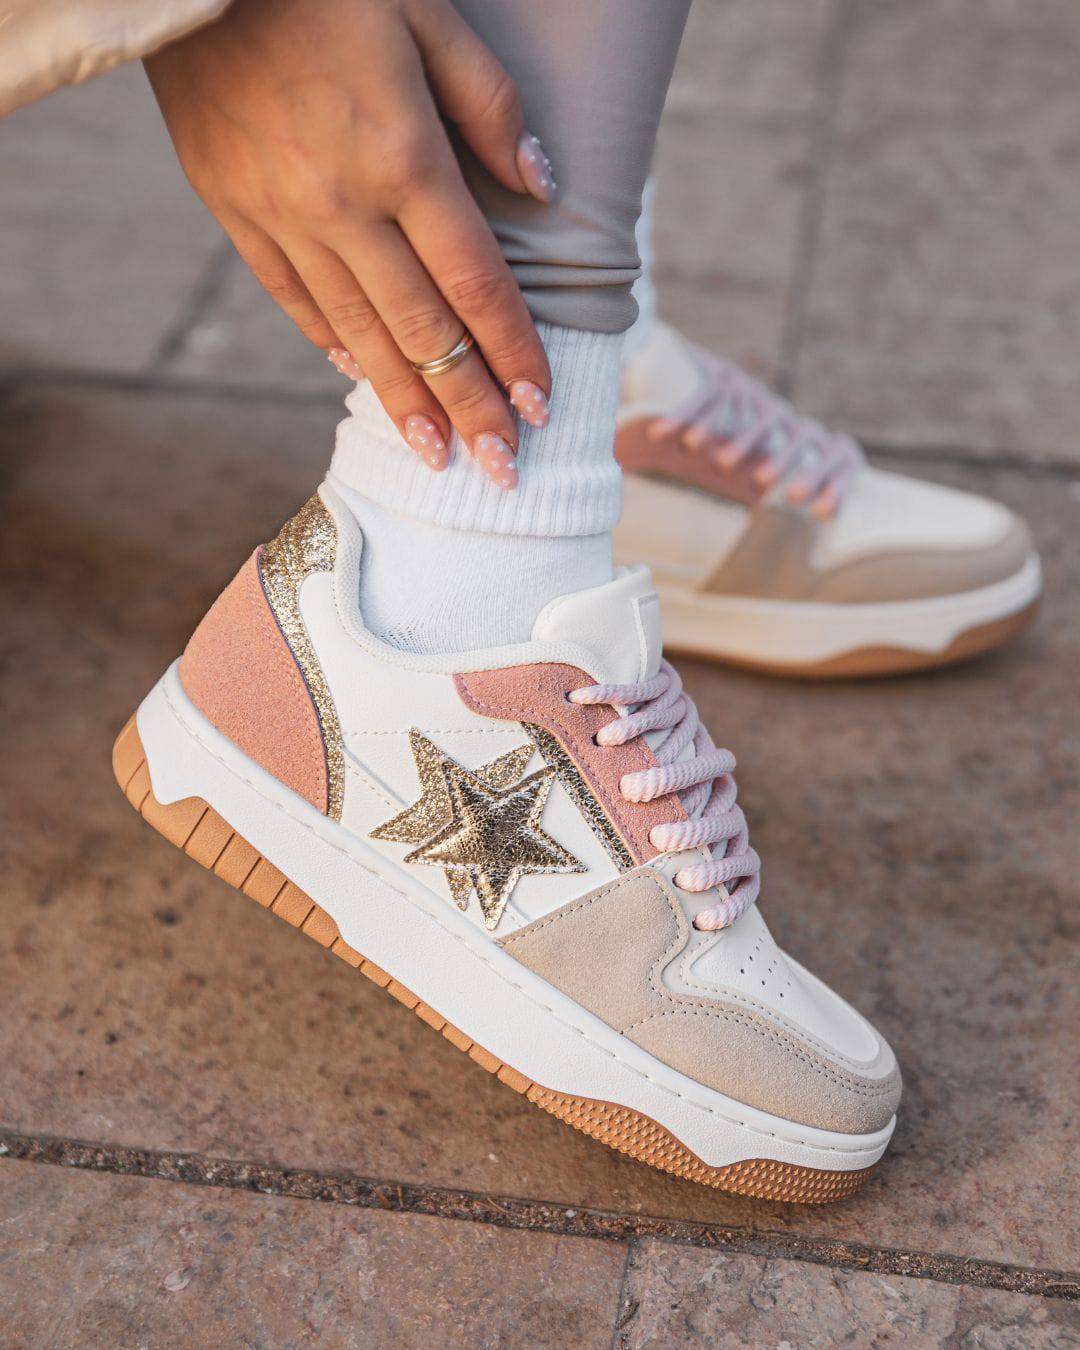 Damen-Sneaker mit rosafarbenem Stern und Plateausohle - Coralia - Casualmode.de